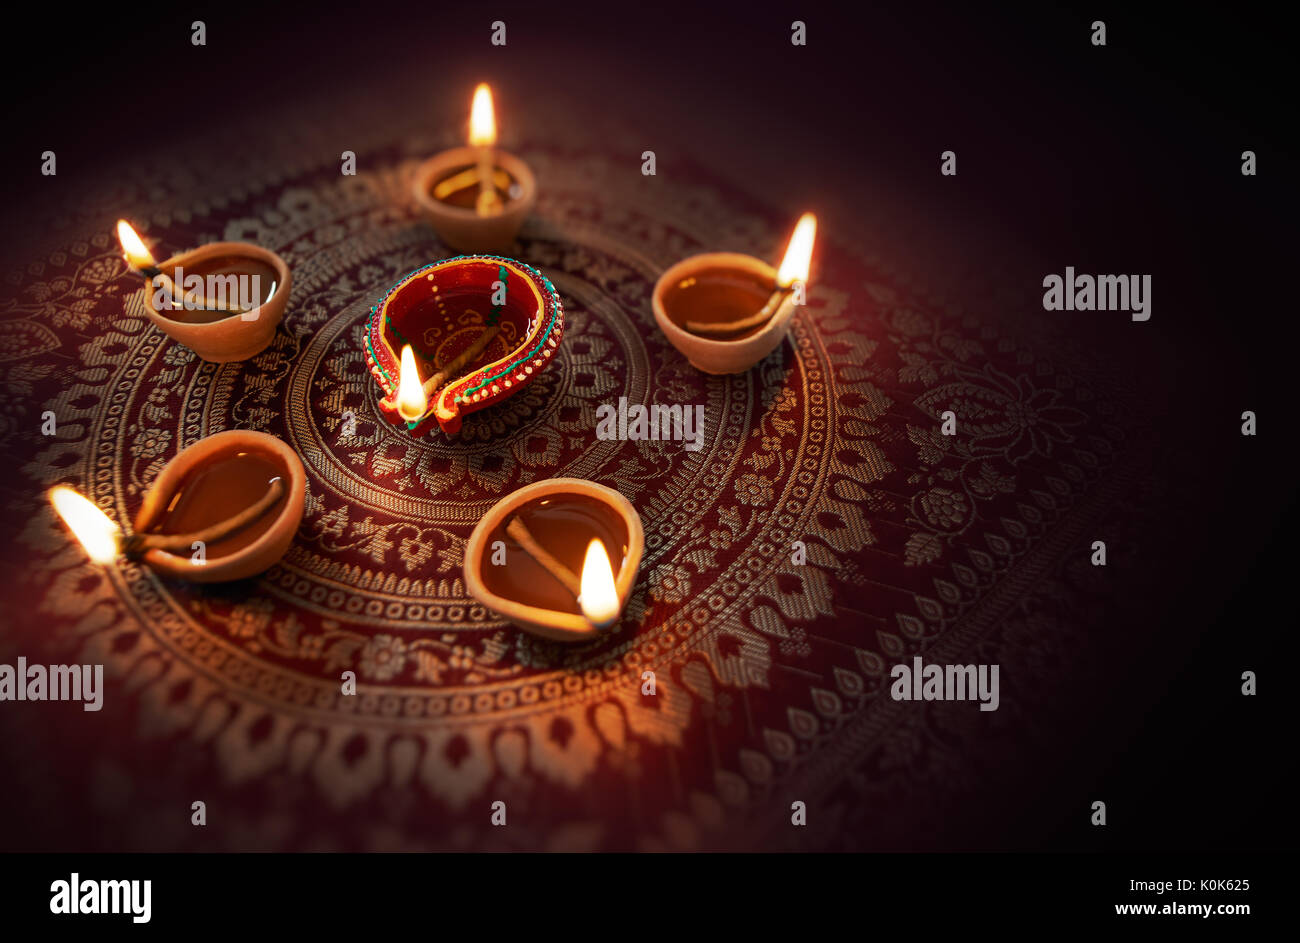 Happy Diwali - Diya lamps lit during diwali celebration Stock ...